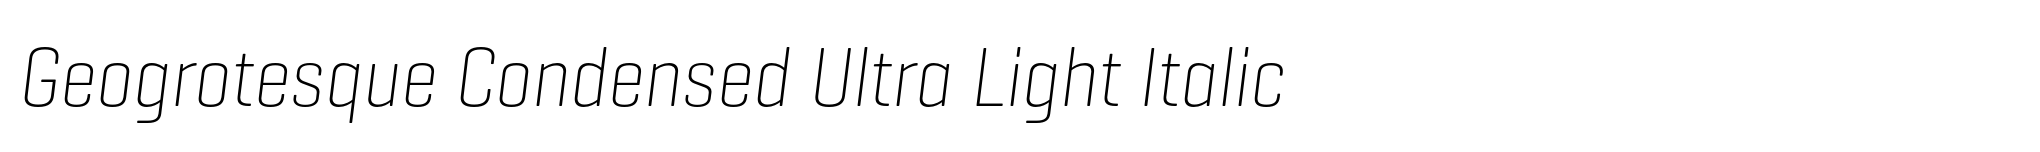 Geogrotesque Condensed Ultra Light Italic image